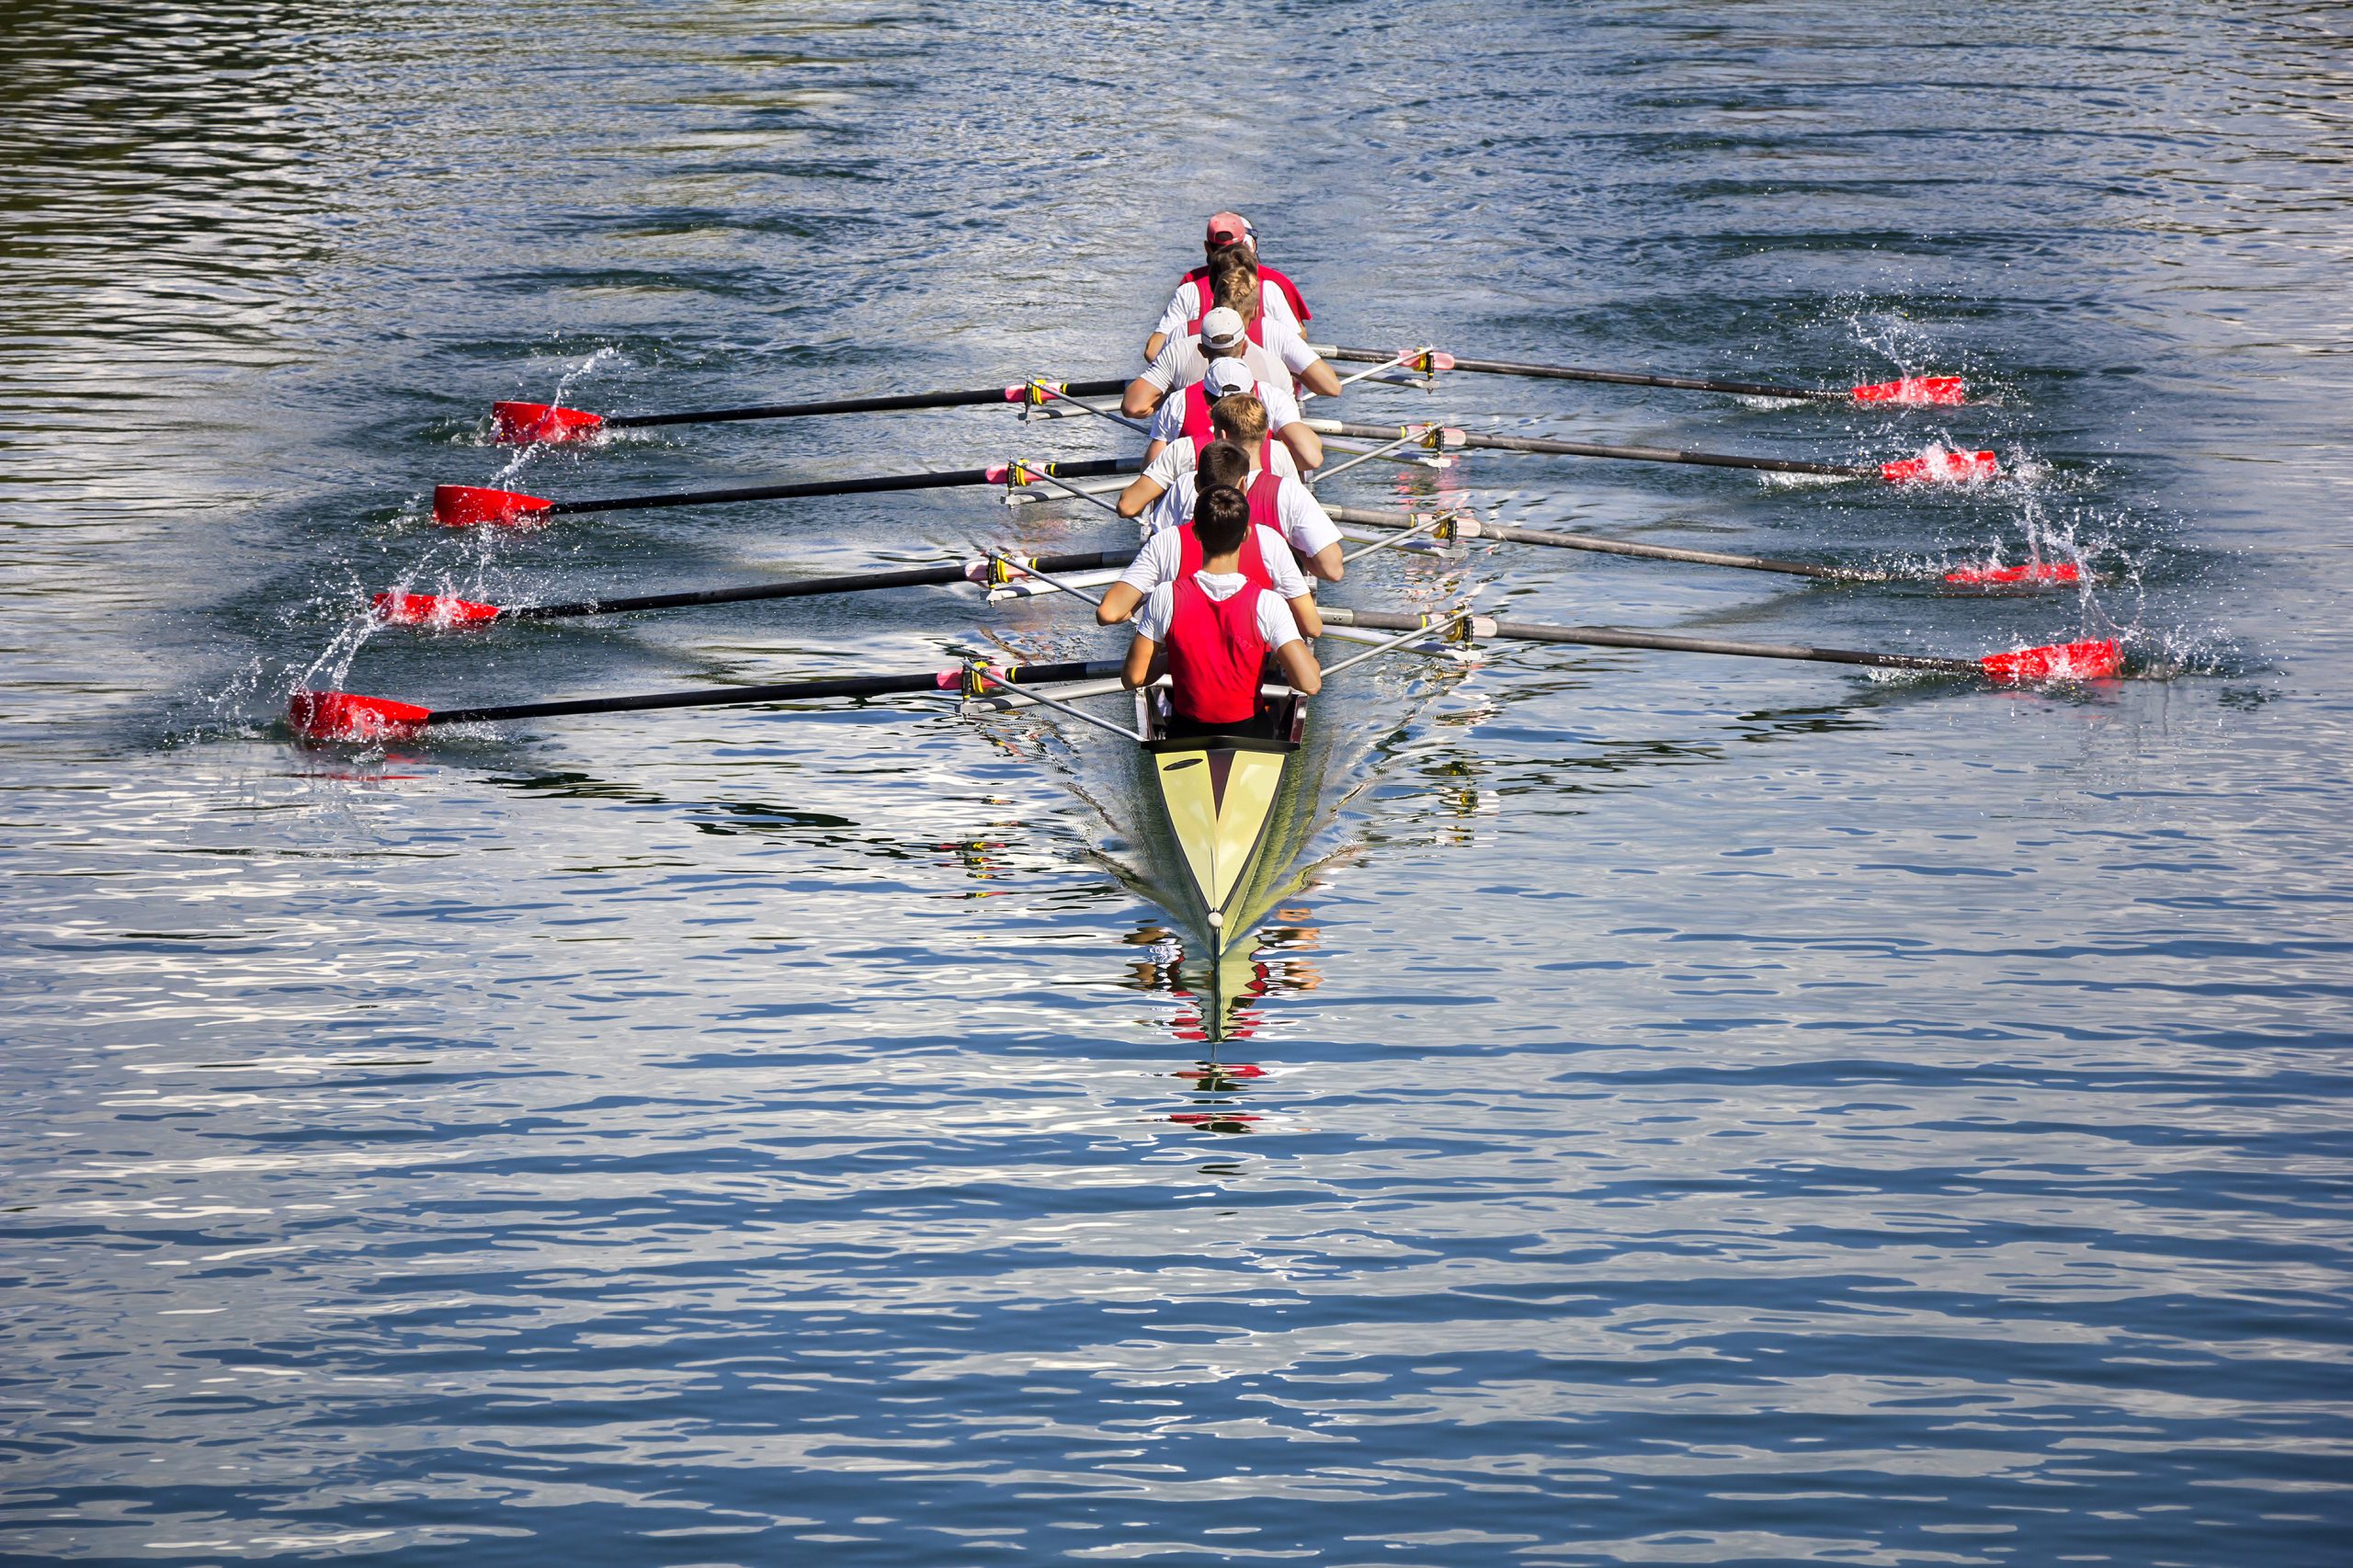 rowing same direction